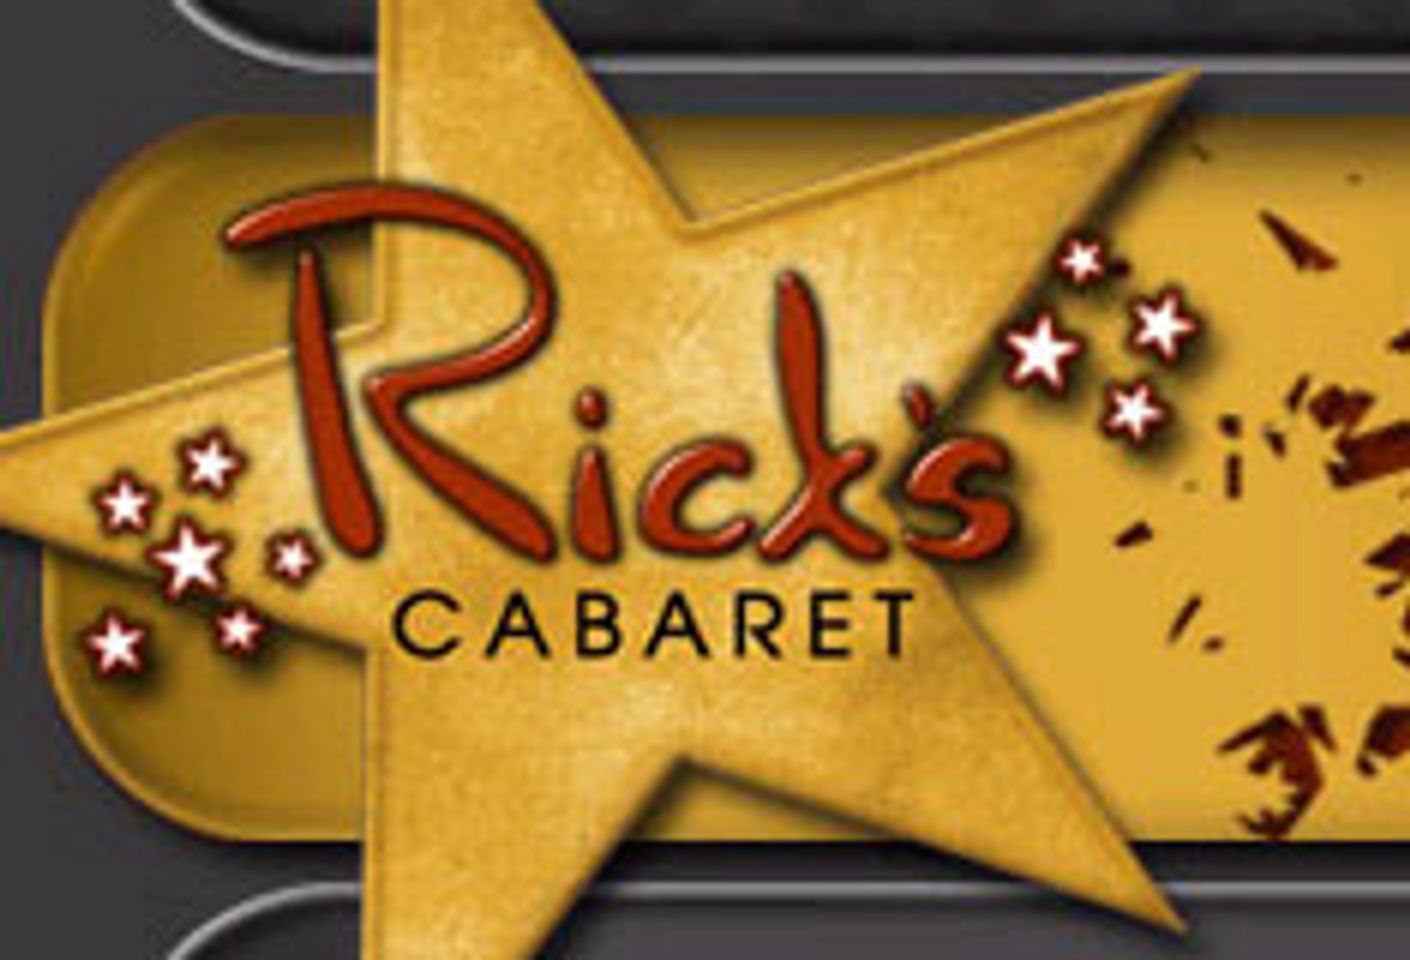 Rick&#8217;s Cabaret Provides More Southern Comfort